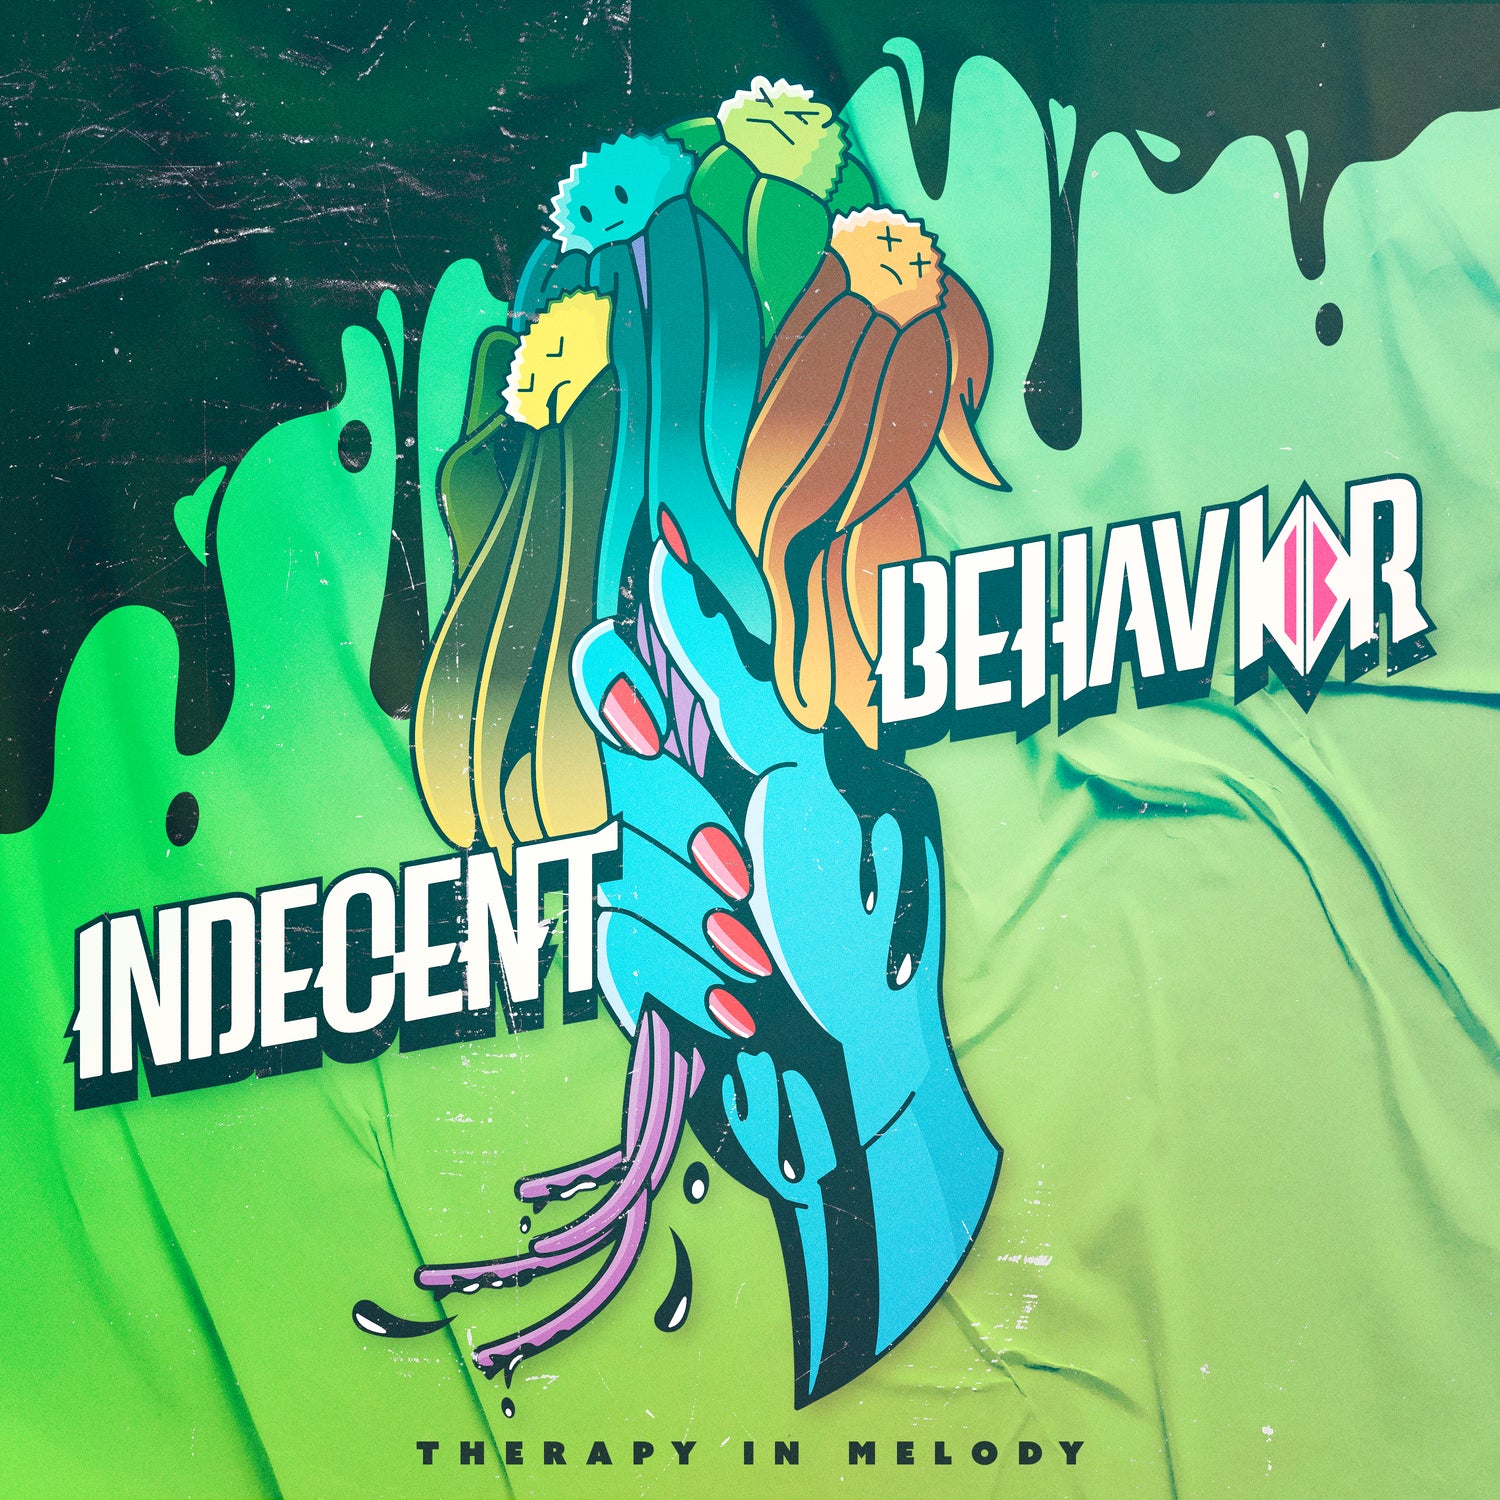 Indecent Behavior